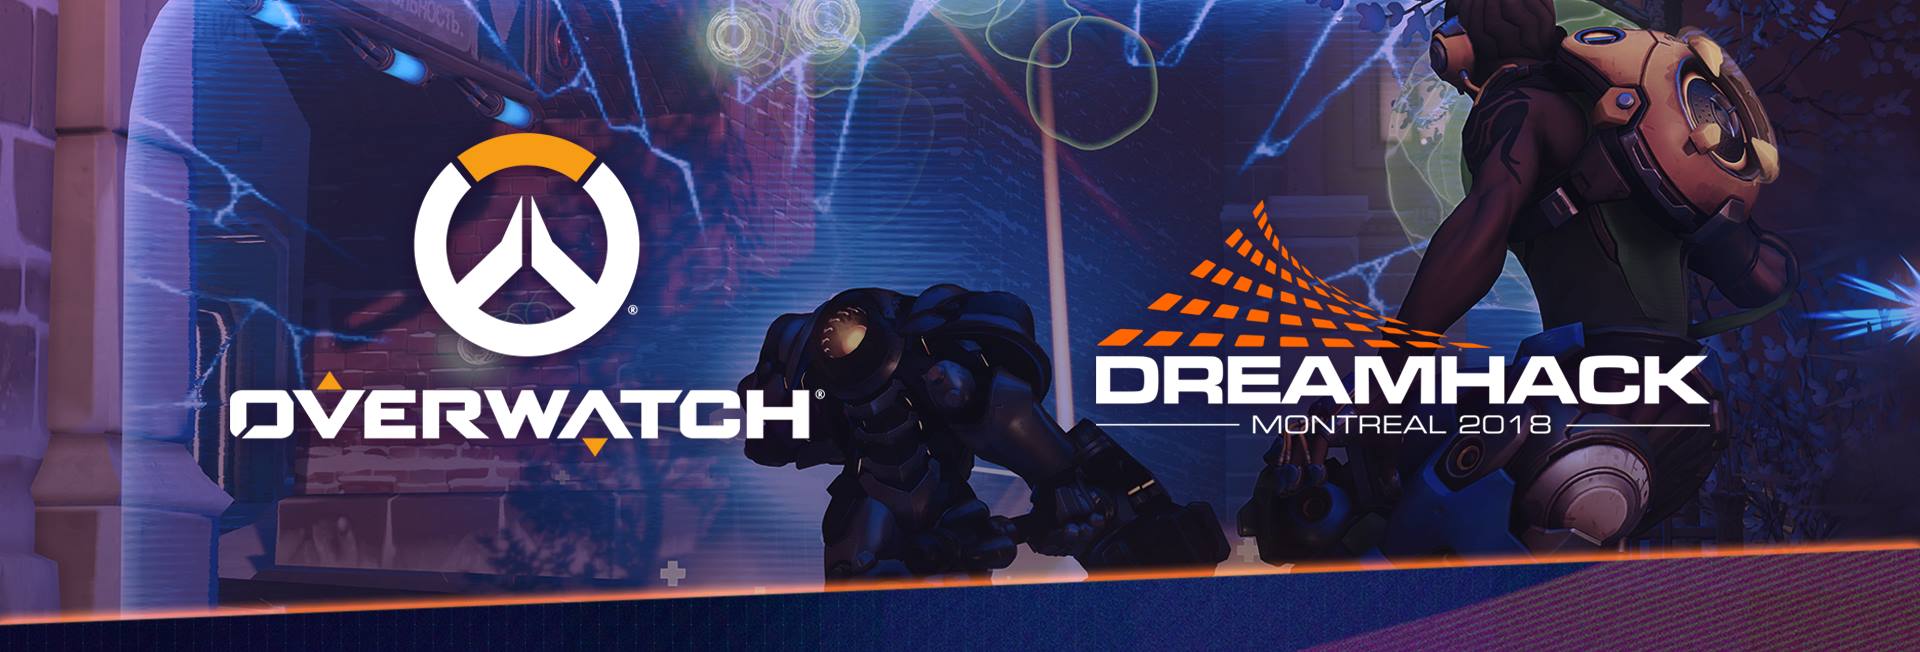 Dreamhack Montreal 2018 - Overwatch